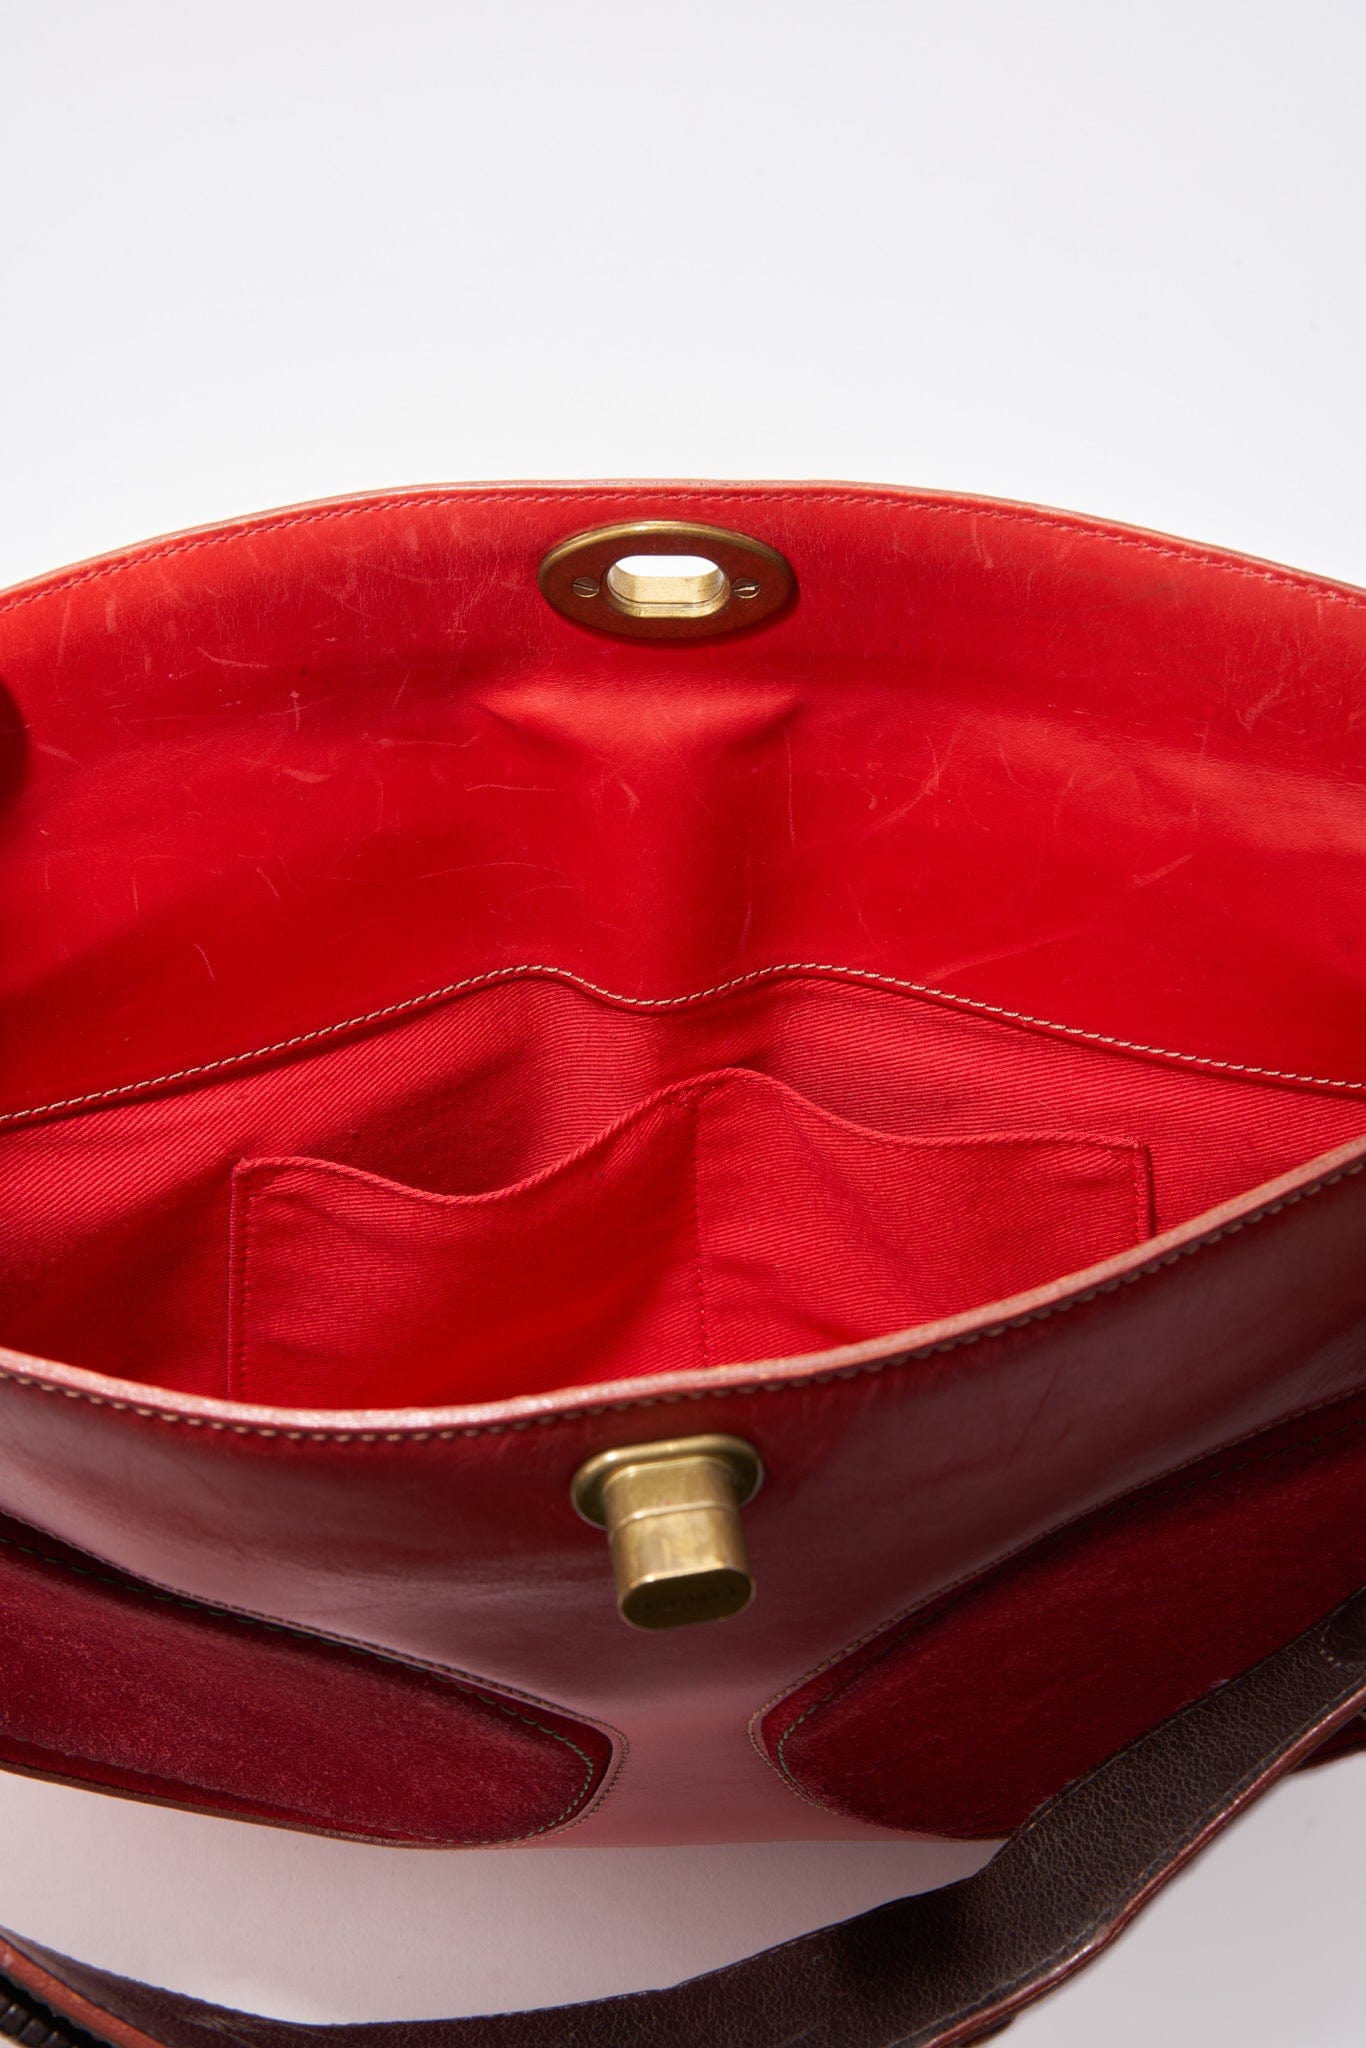 Vintage Loewe Red Leather and Suede Shoulder Bag